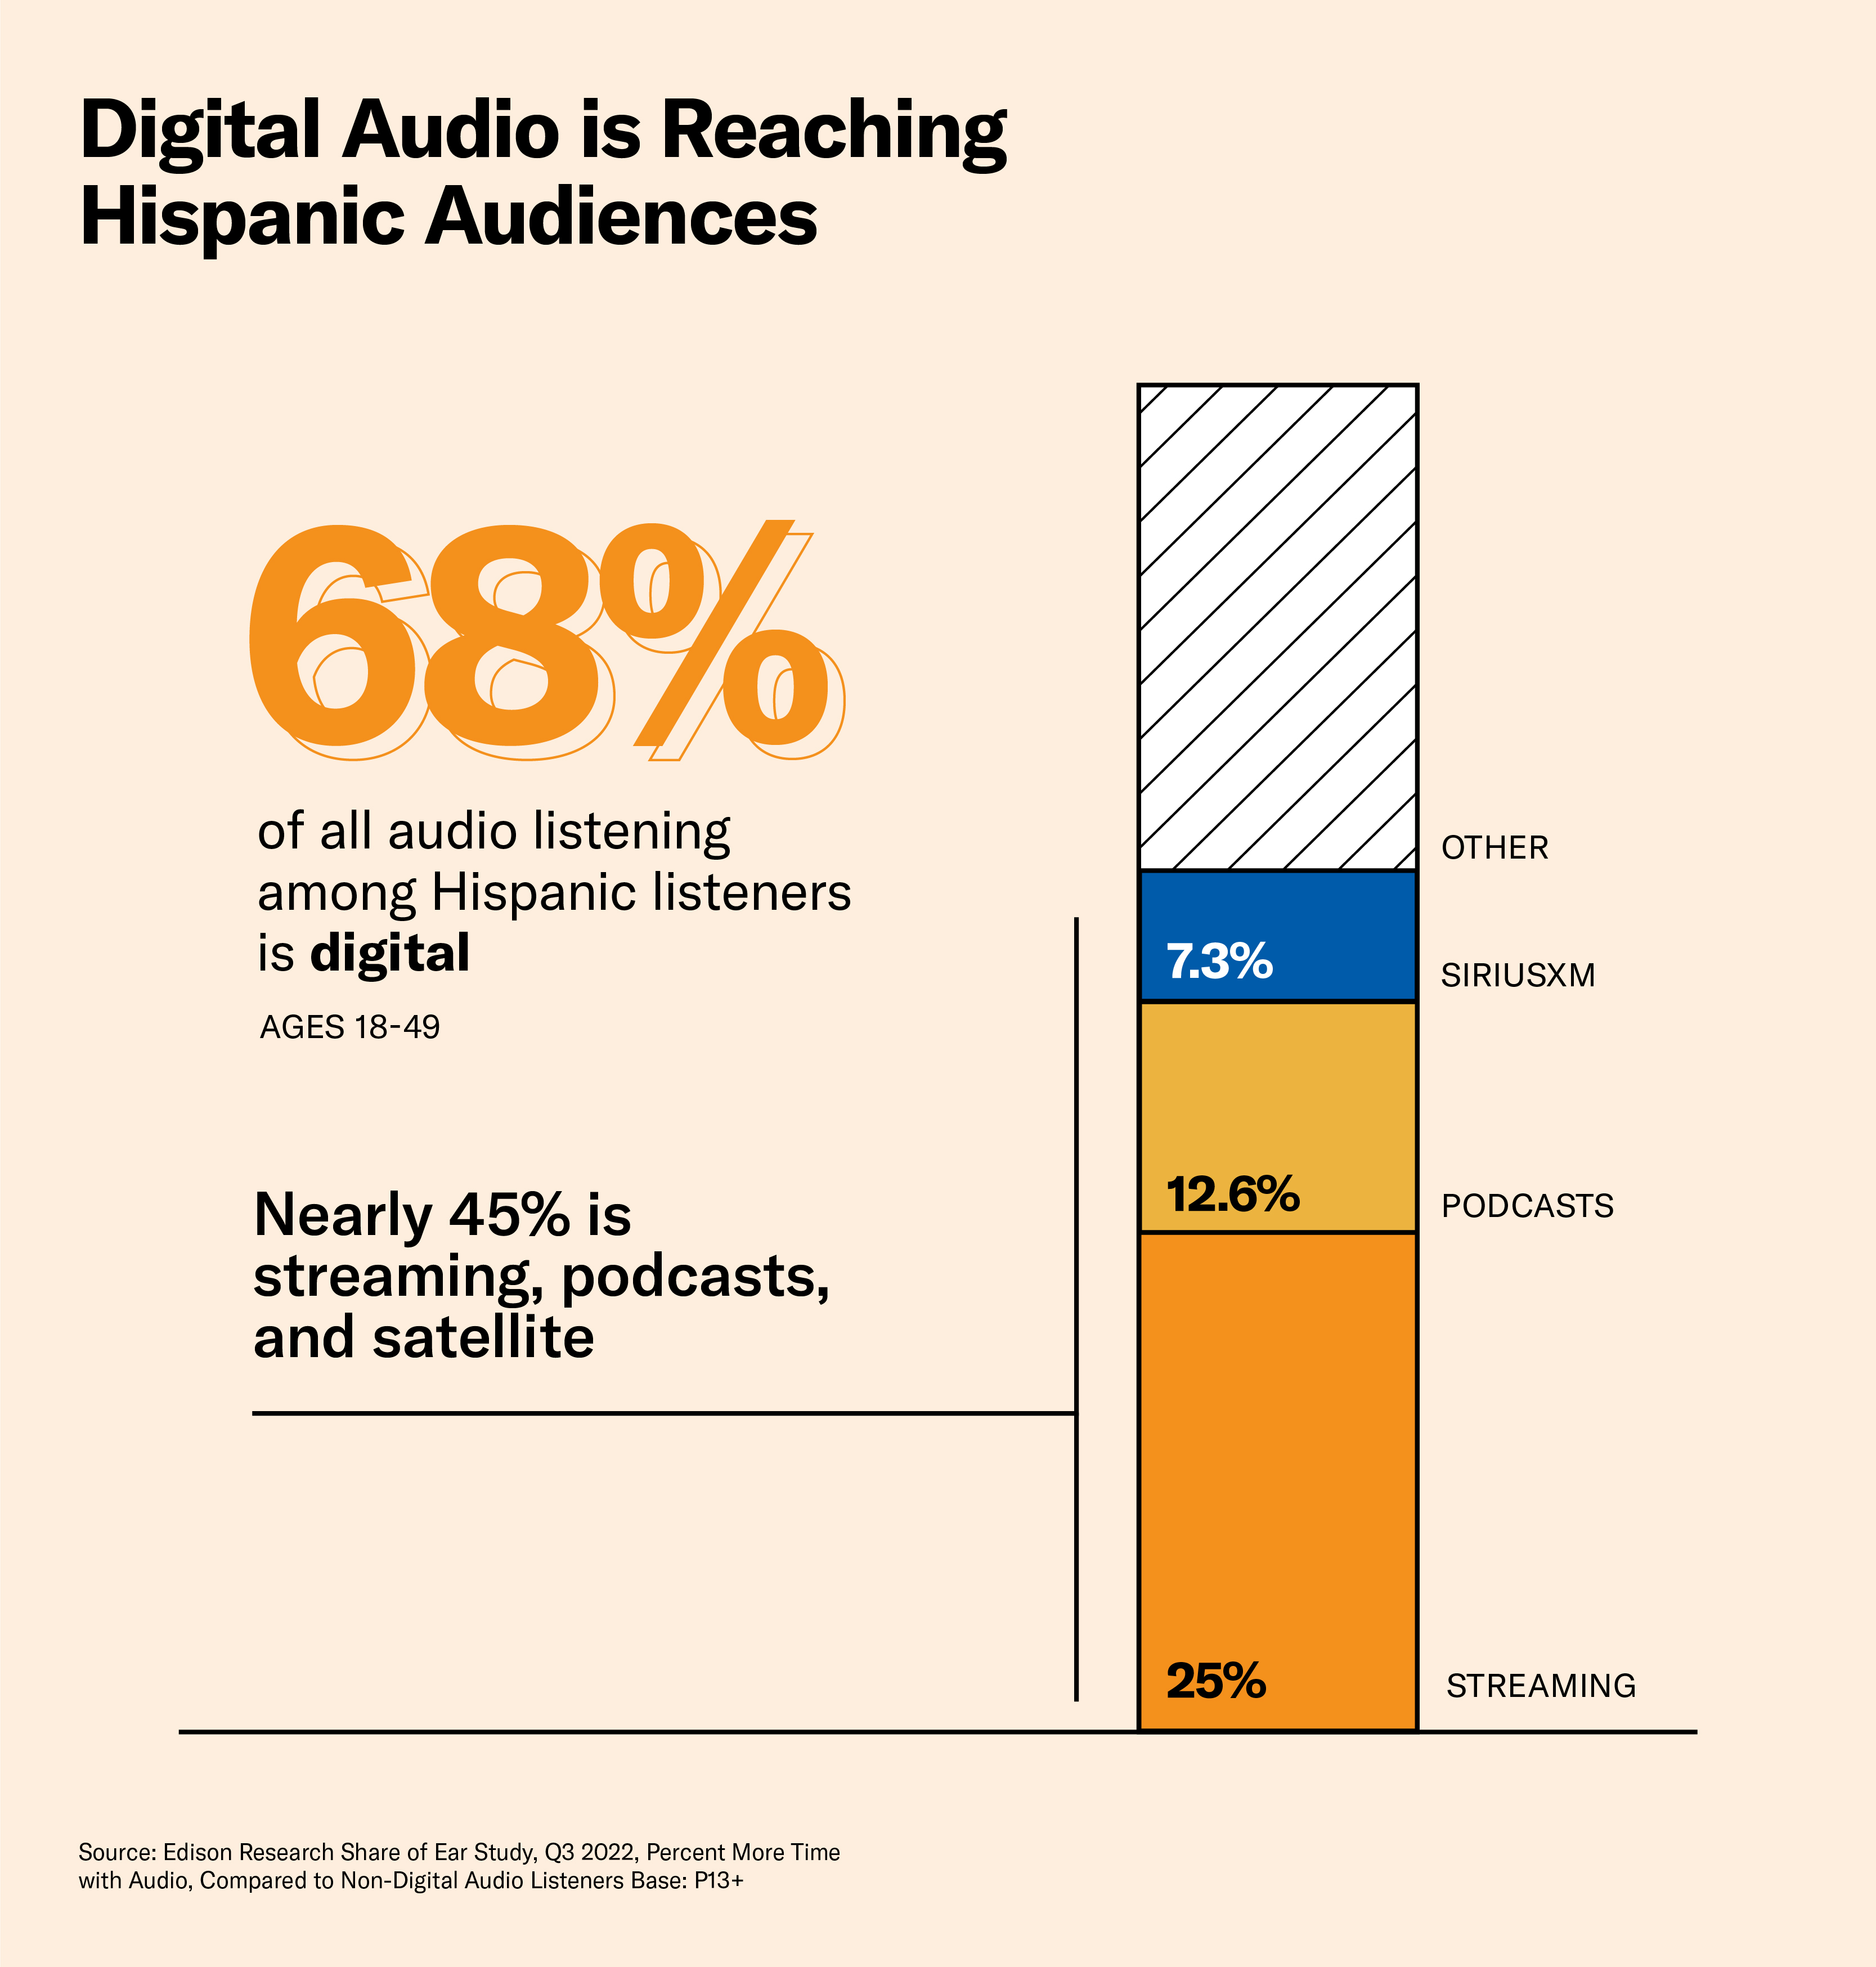 Digital audio is reaching Hispanic audiences